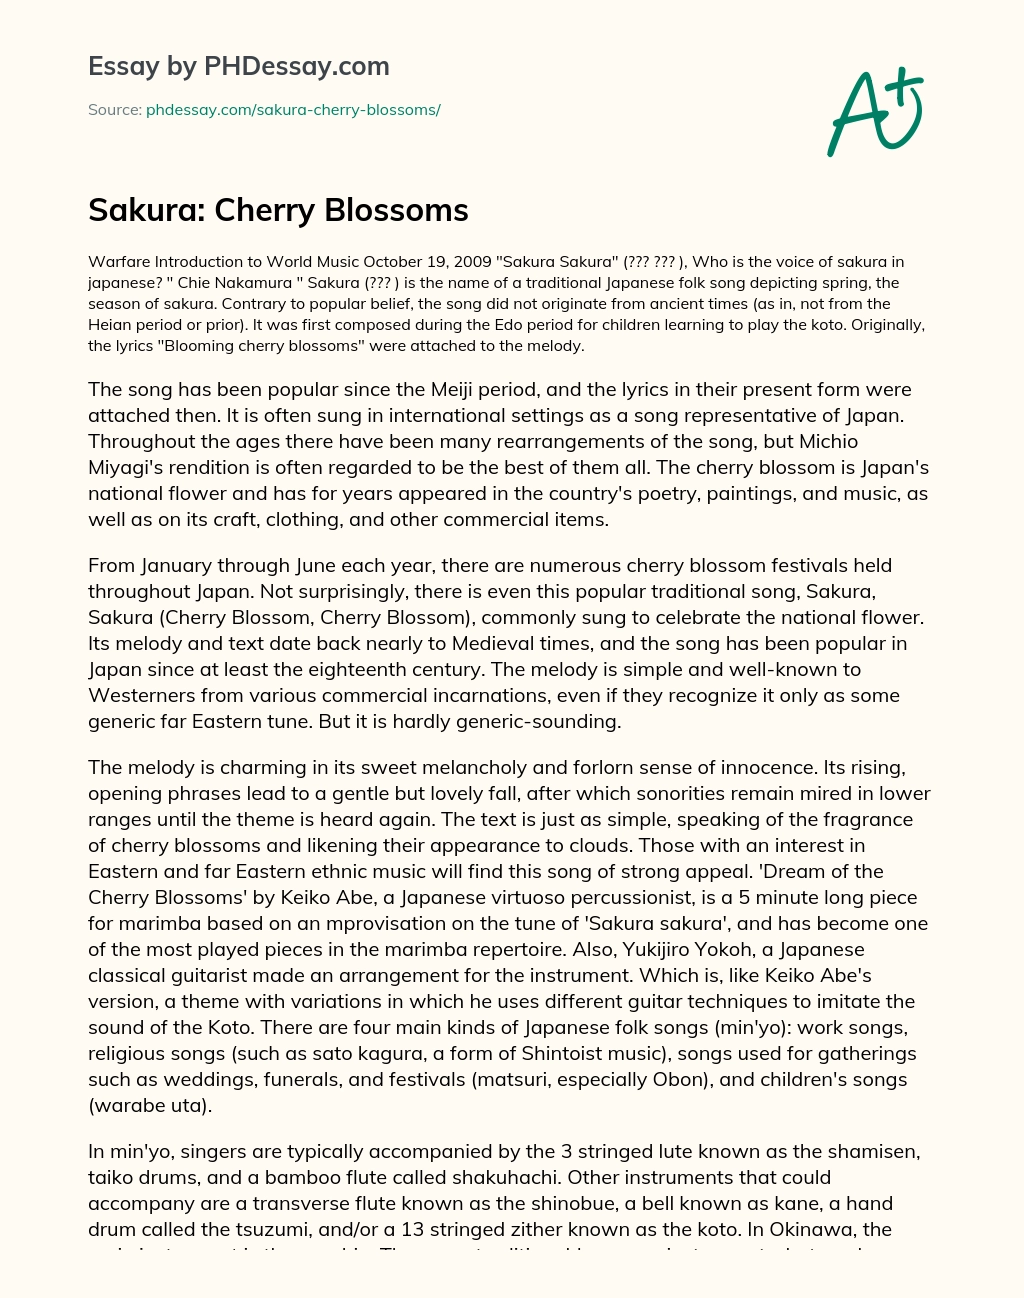 Sakura: Cherry Blossoms essay